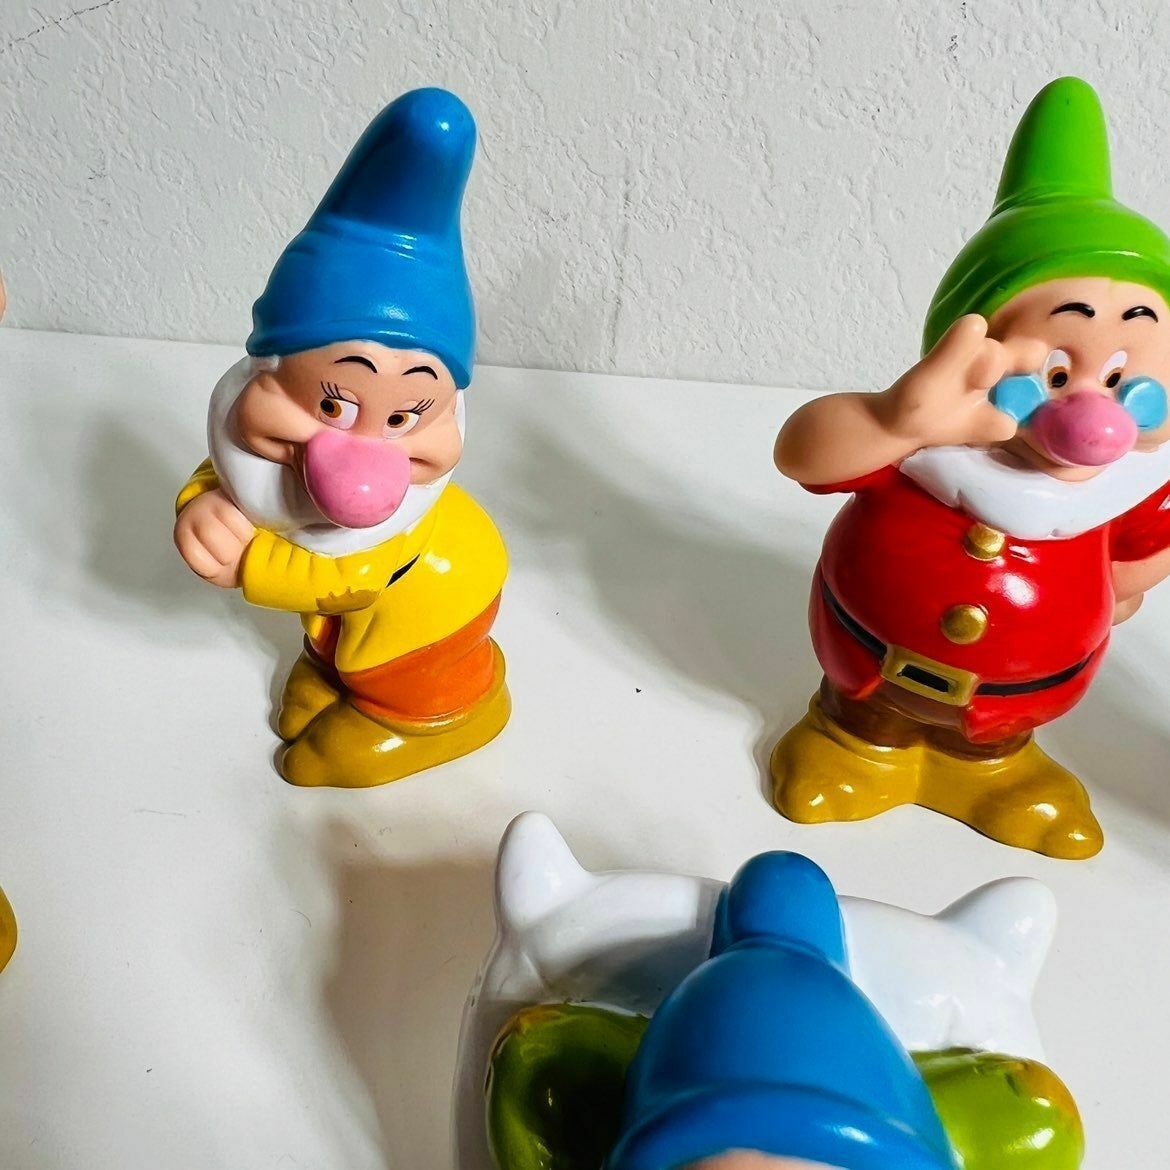 Snow White Dwarfs toy figures set of 5 toys Disney Sleepy, Bashful, Doc, Grumpy